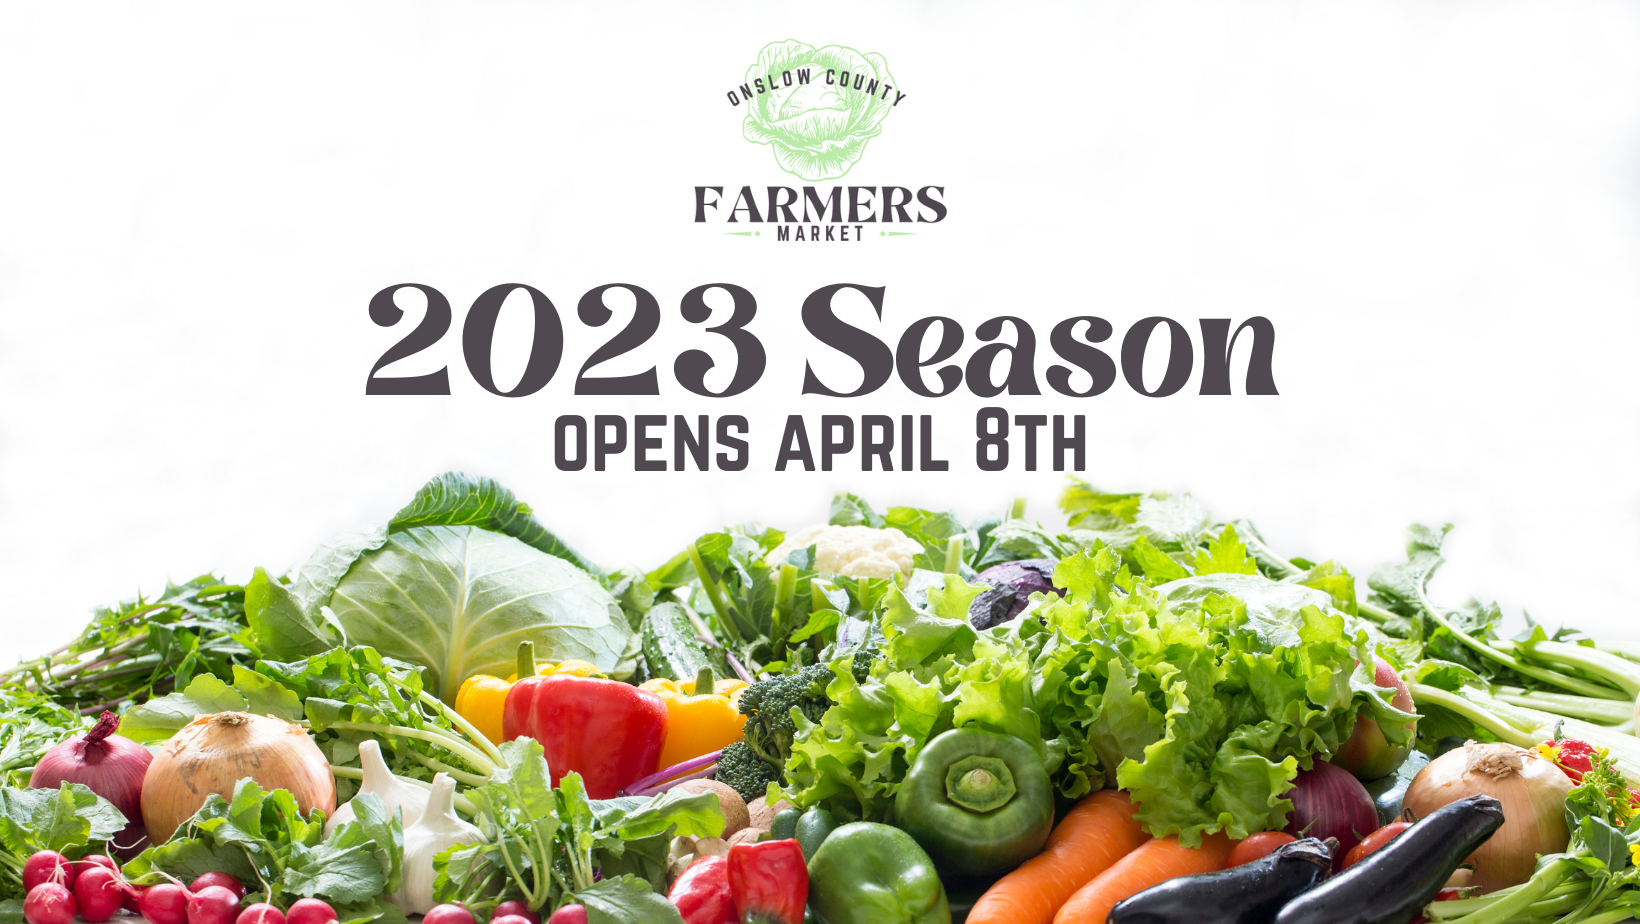 Onslow County Farmers Market 2023 Season opens April 8